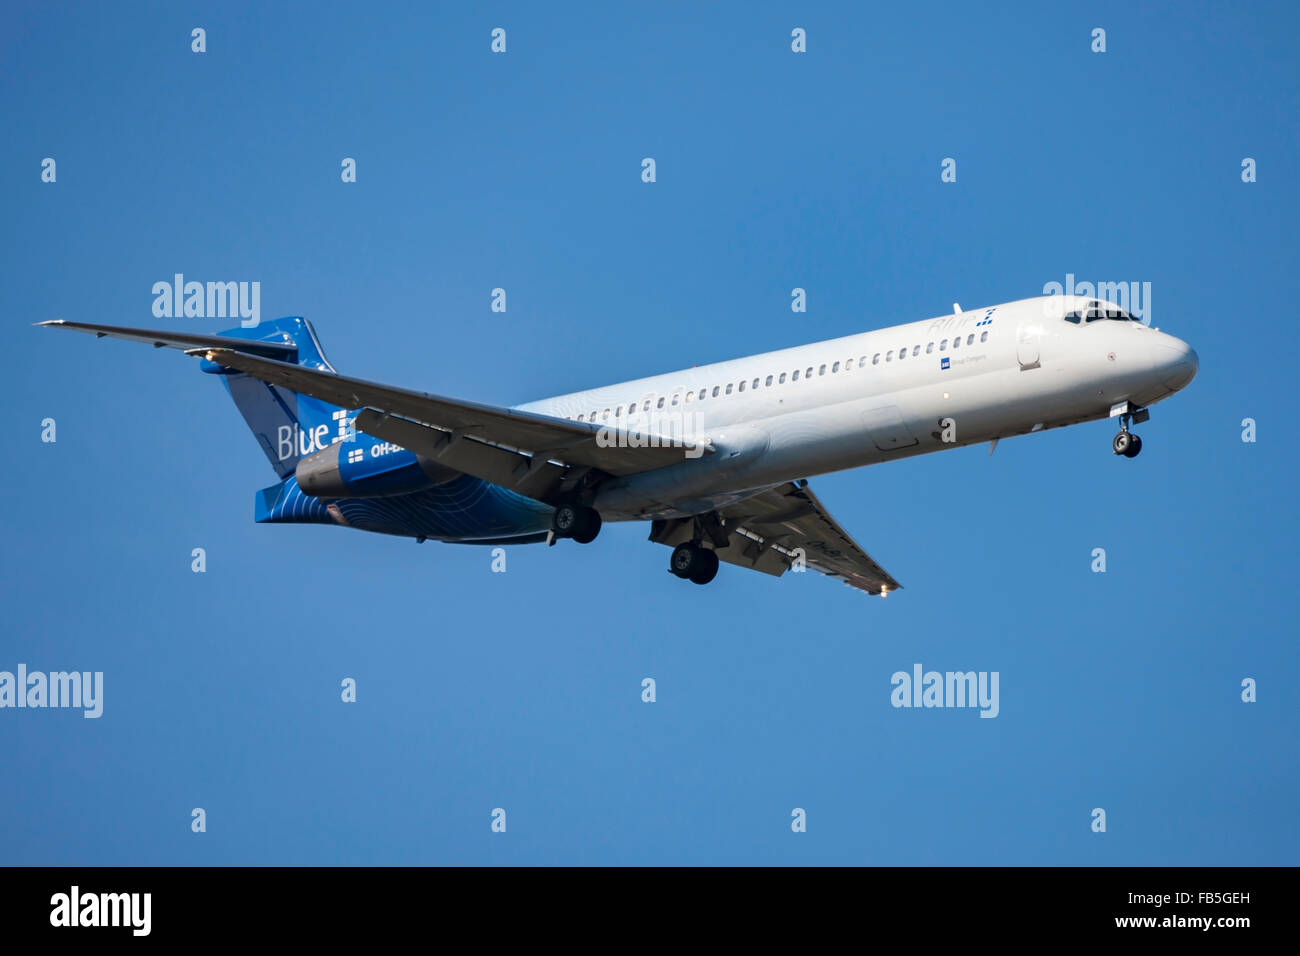 SAS Blue 1 Airliner Stock Photo